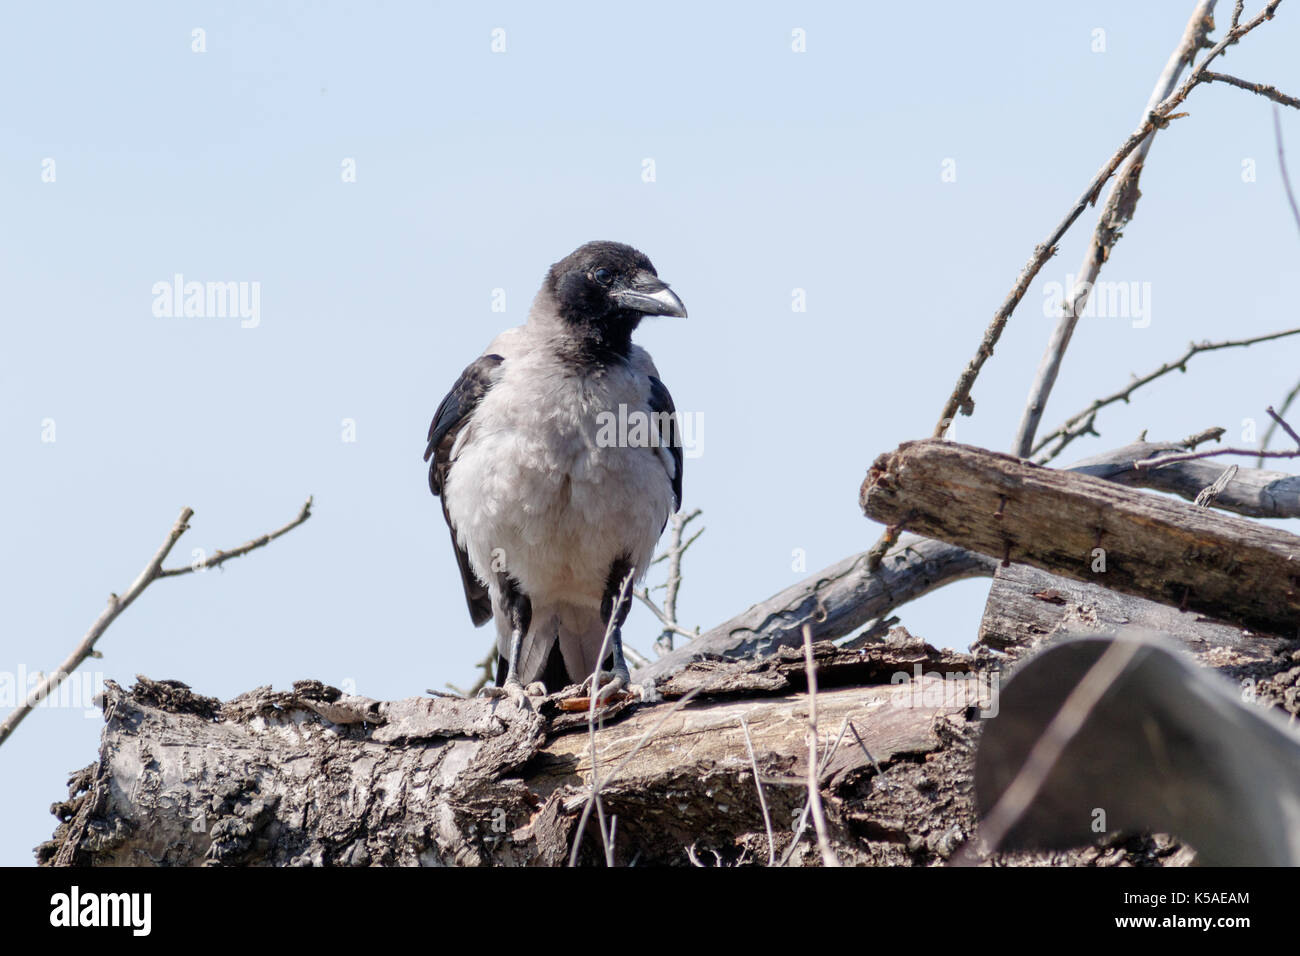 Hooded Crow (Corvus cornix) in nature. Stock Photo